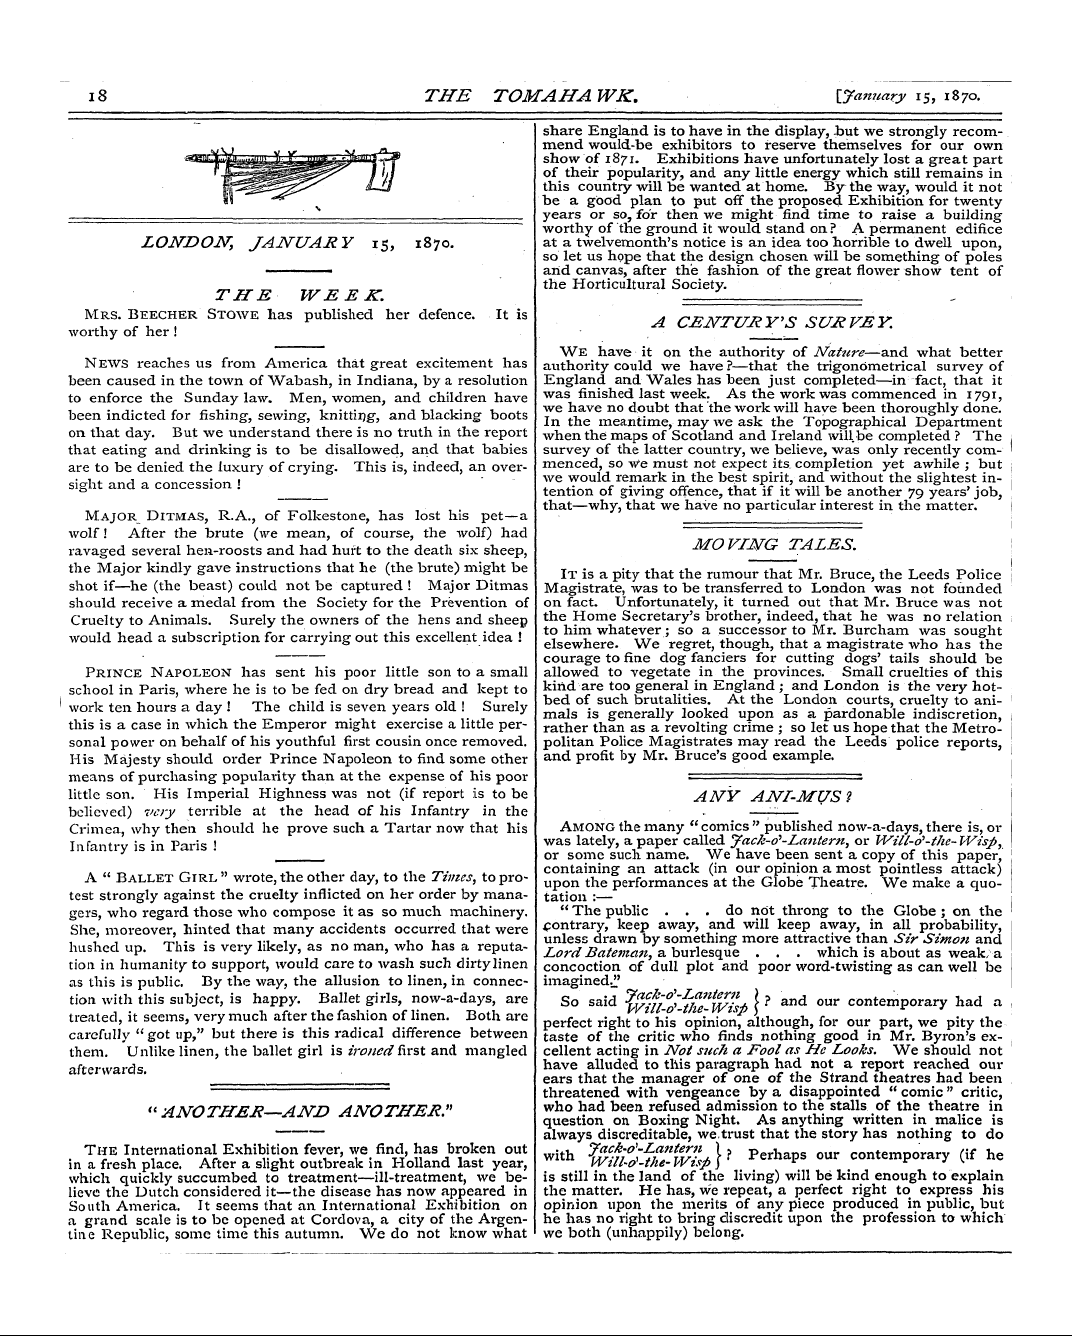 Tomahawk (1867-1870): jS F Y, 1st edition: 6